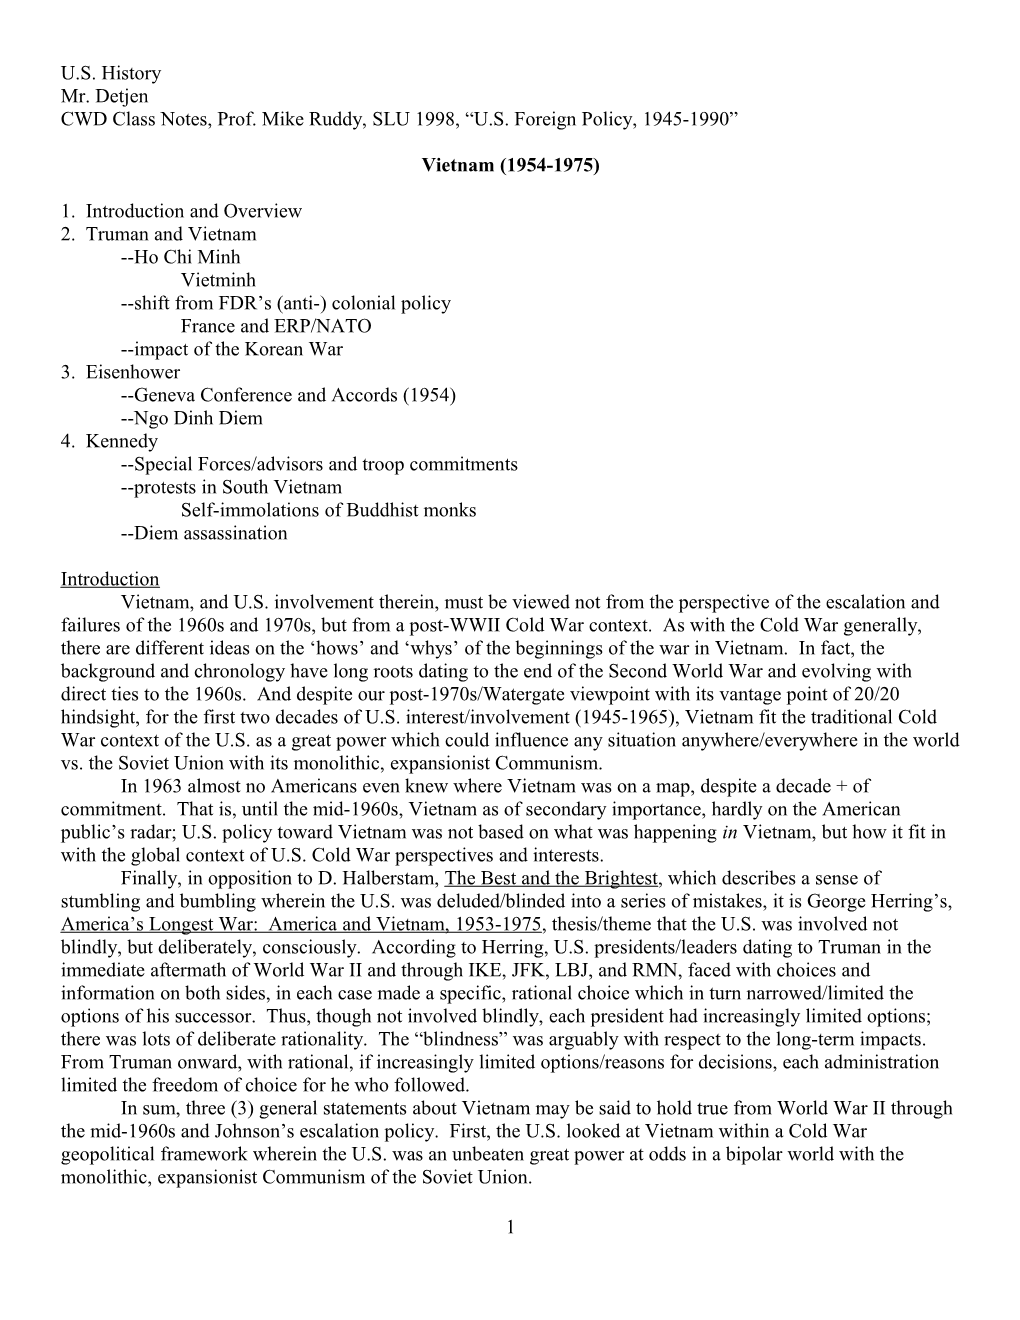 CWD Class Notes, Prof. Mike Ruddy, SLU 1998, U.S. Foreign Policy, 1945-1990